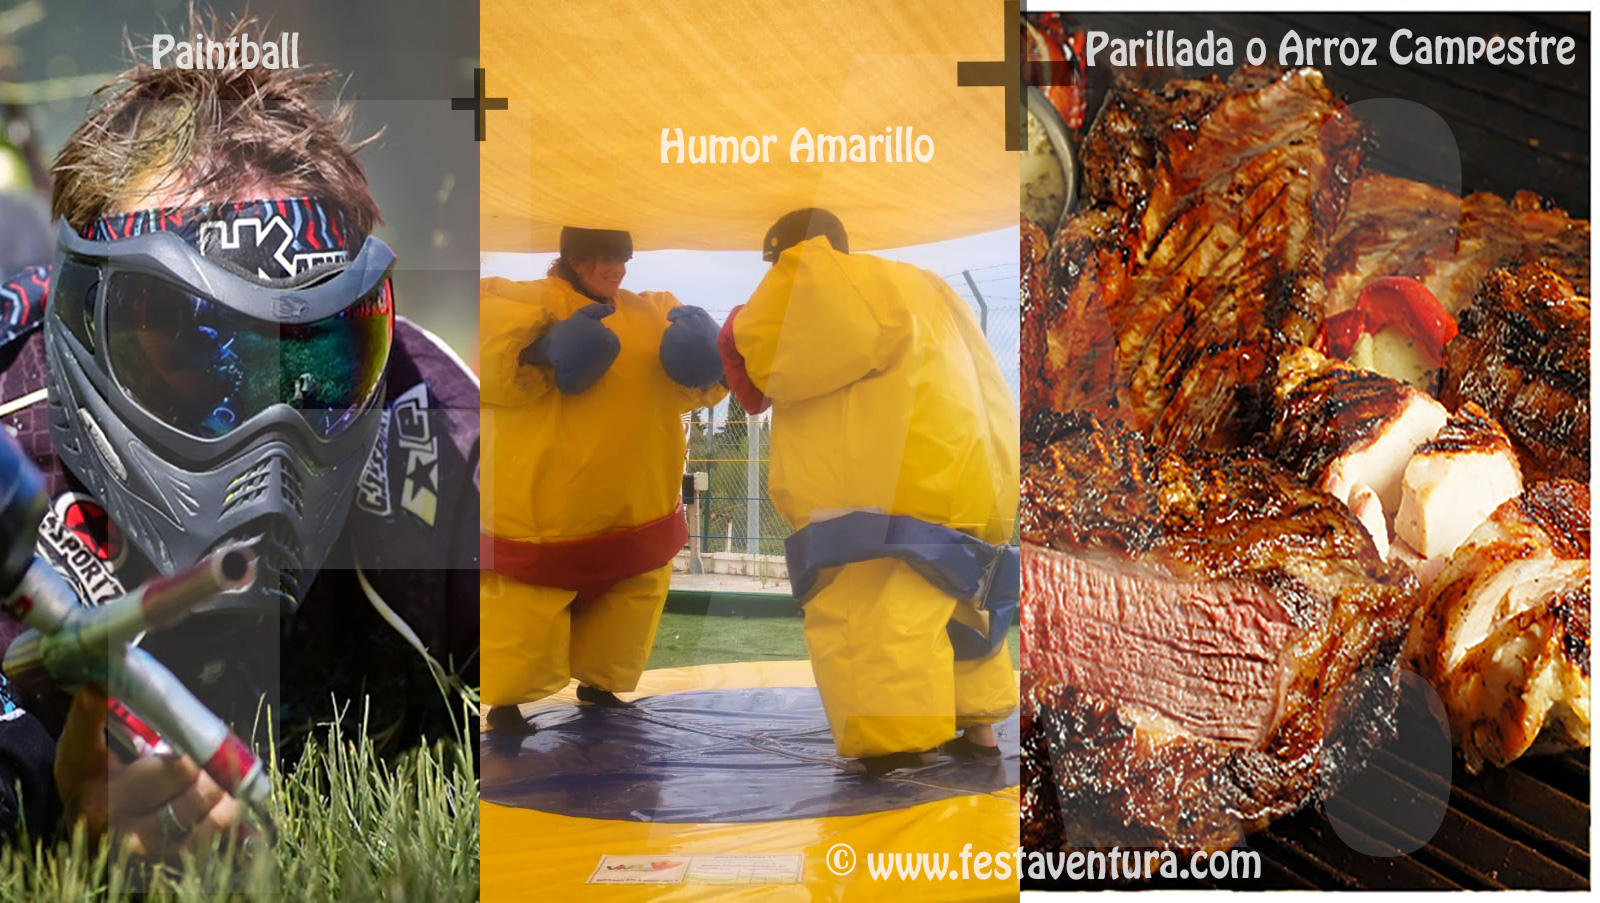 Humor Amarillo + Paintball + Parrillada